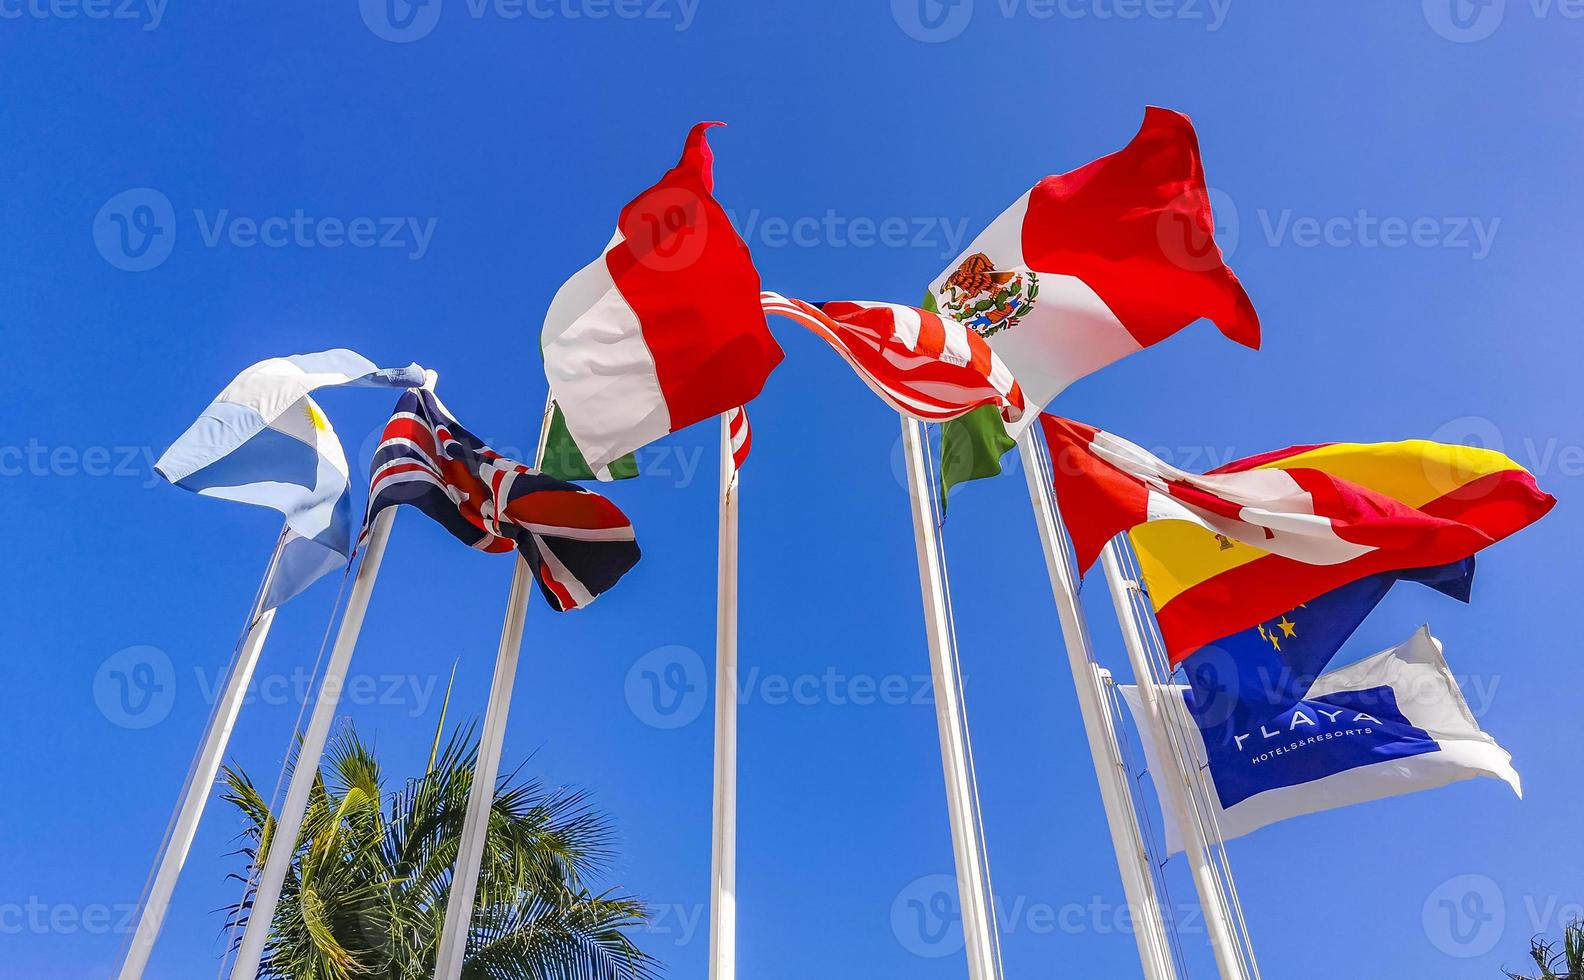 banderas de muchos países como españa, estados unidos, canadá, méxico. foto